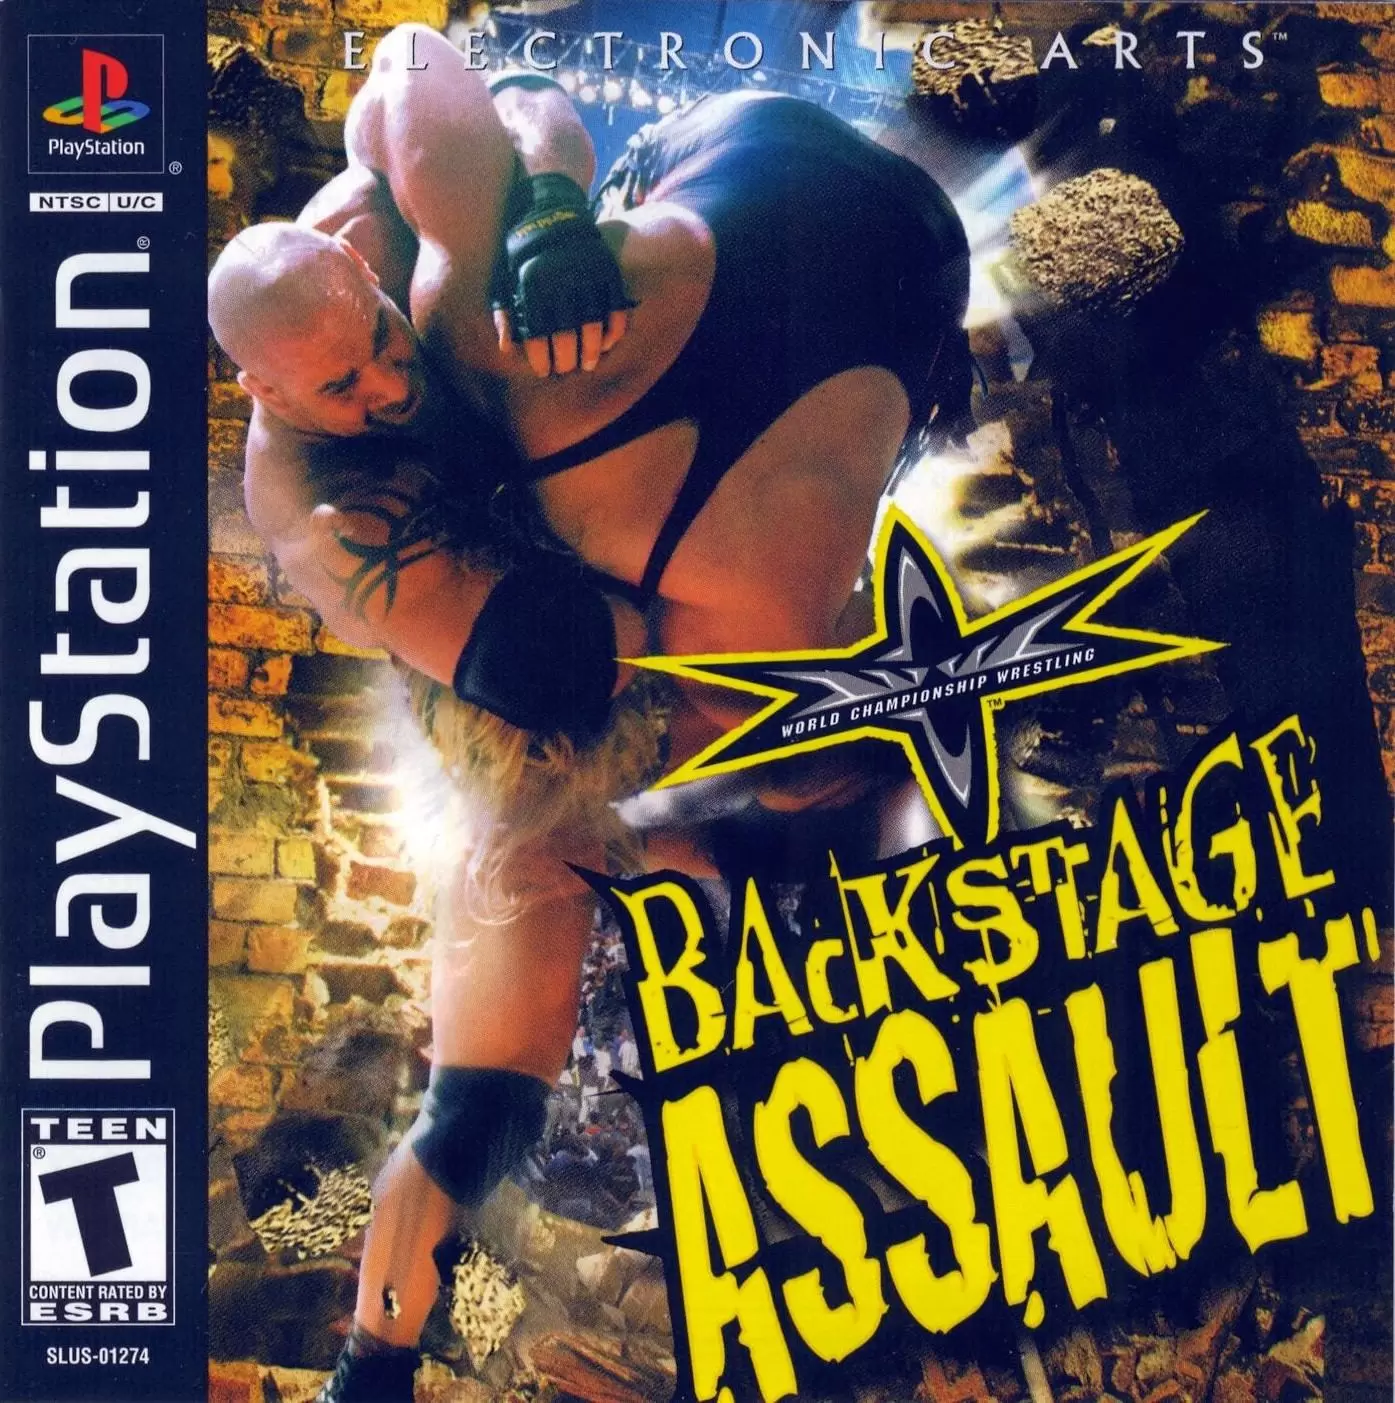 Playstation games - WCW Backstage Assault